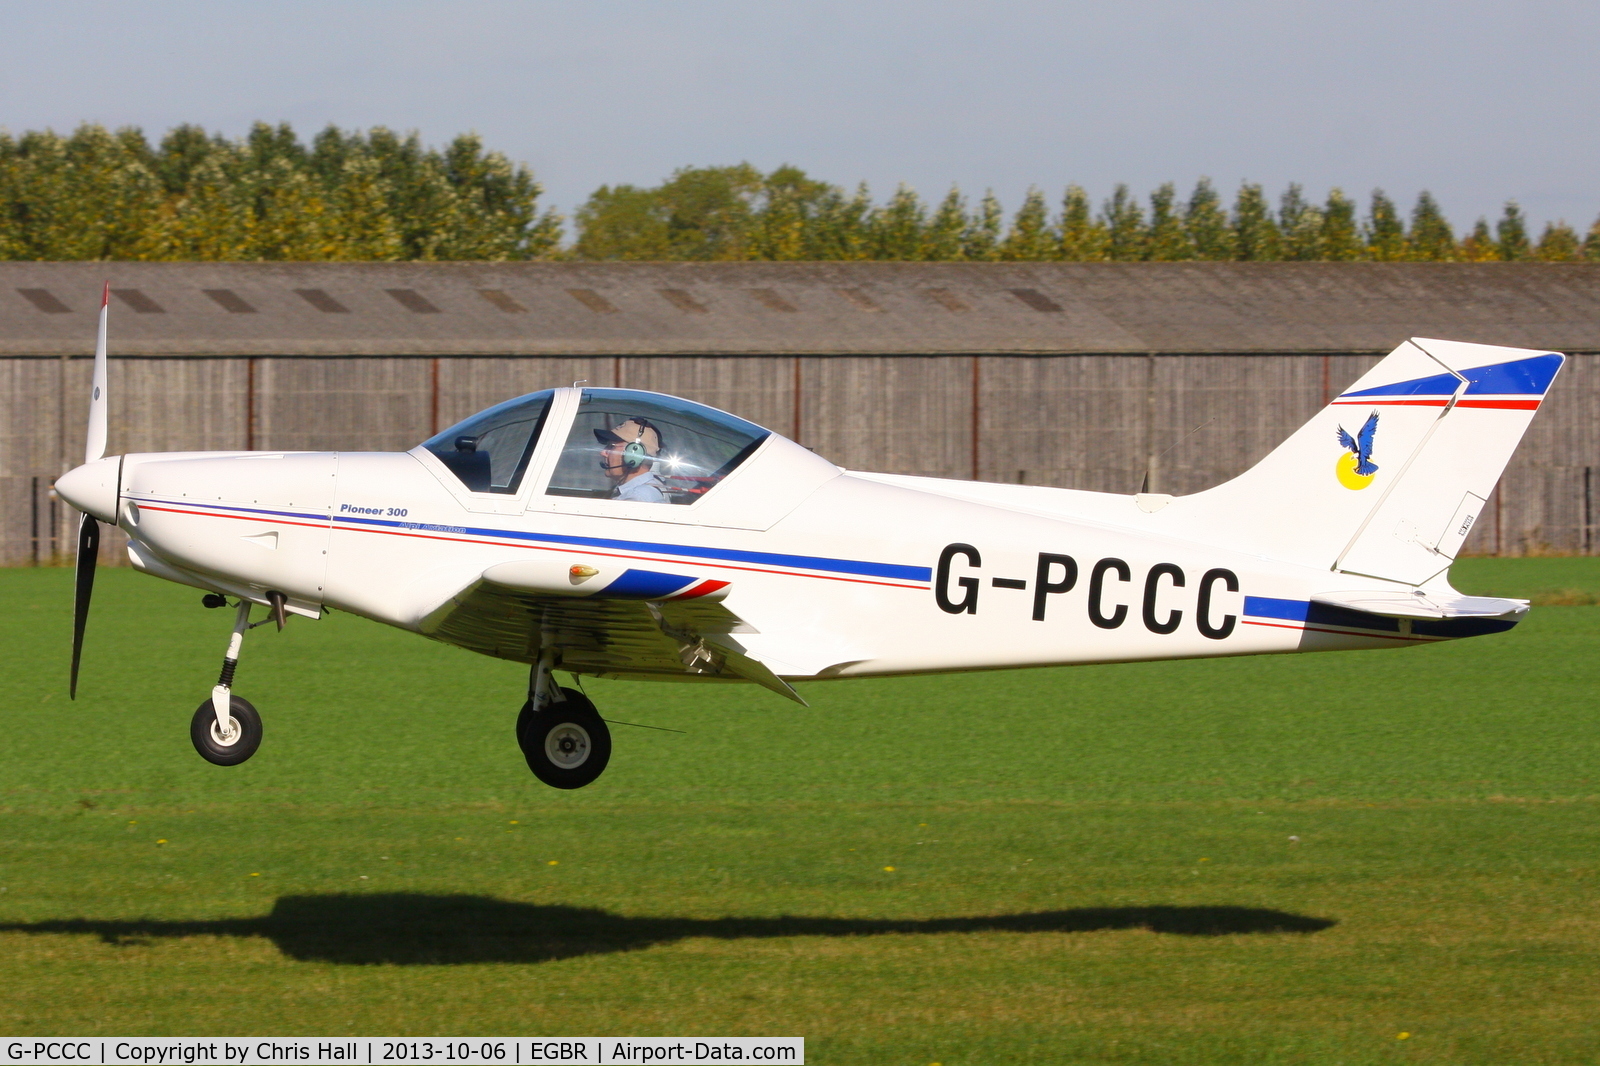 G-PCCC, 2004 Alpi Aviation Pioneer 300 C/N PFA 330-14220, at Breighton's Pre Hibernation Fly-in, 2013